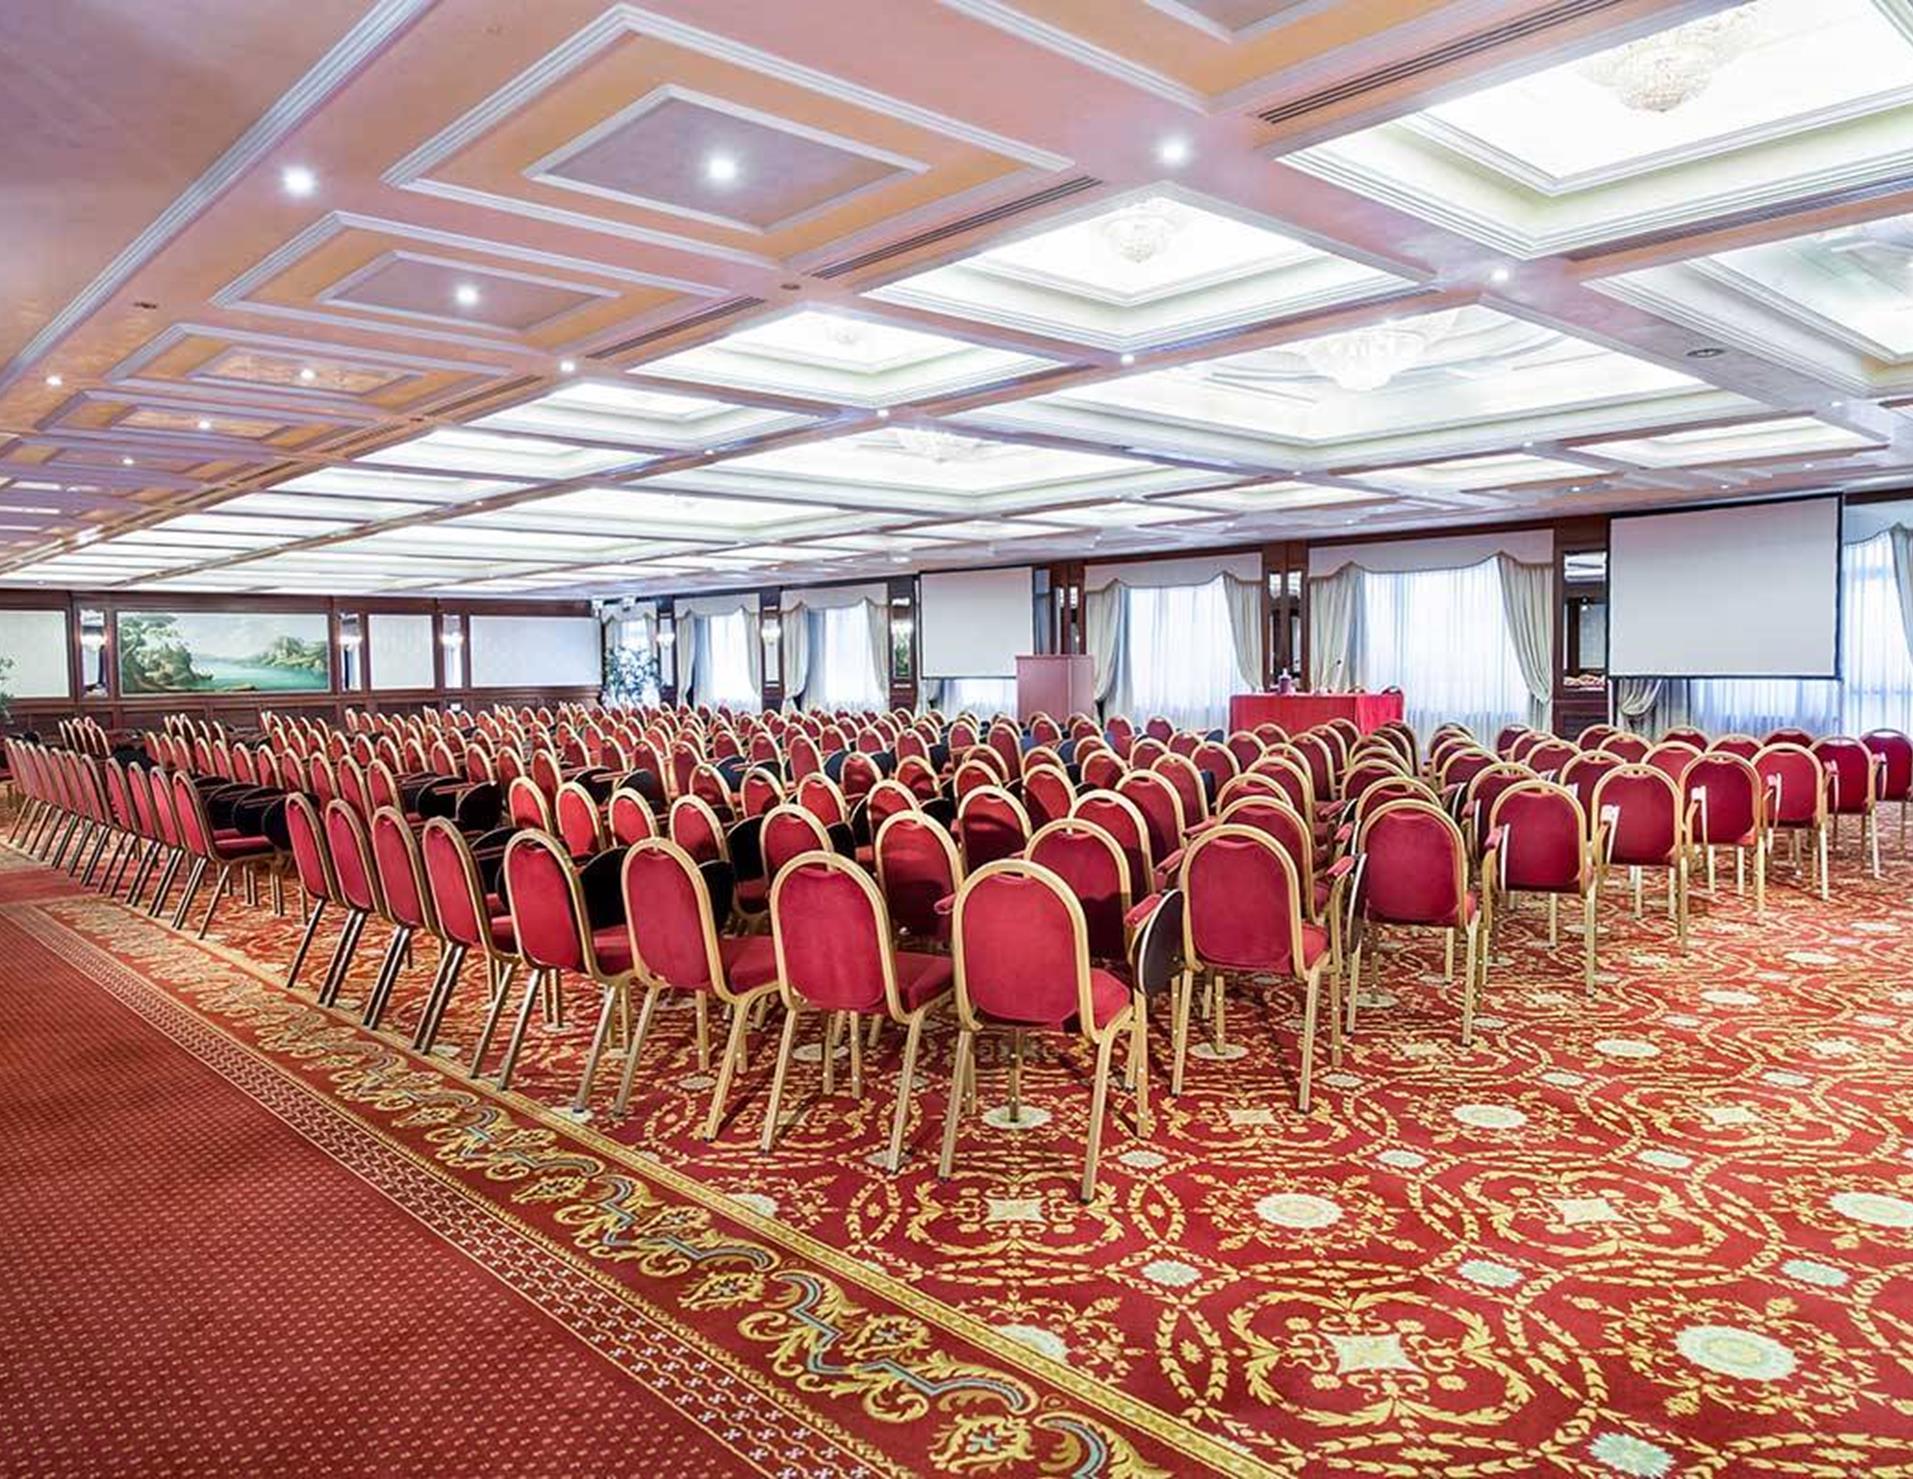 Royal Hotel Carlton - Conference Room